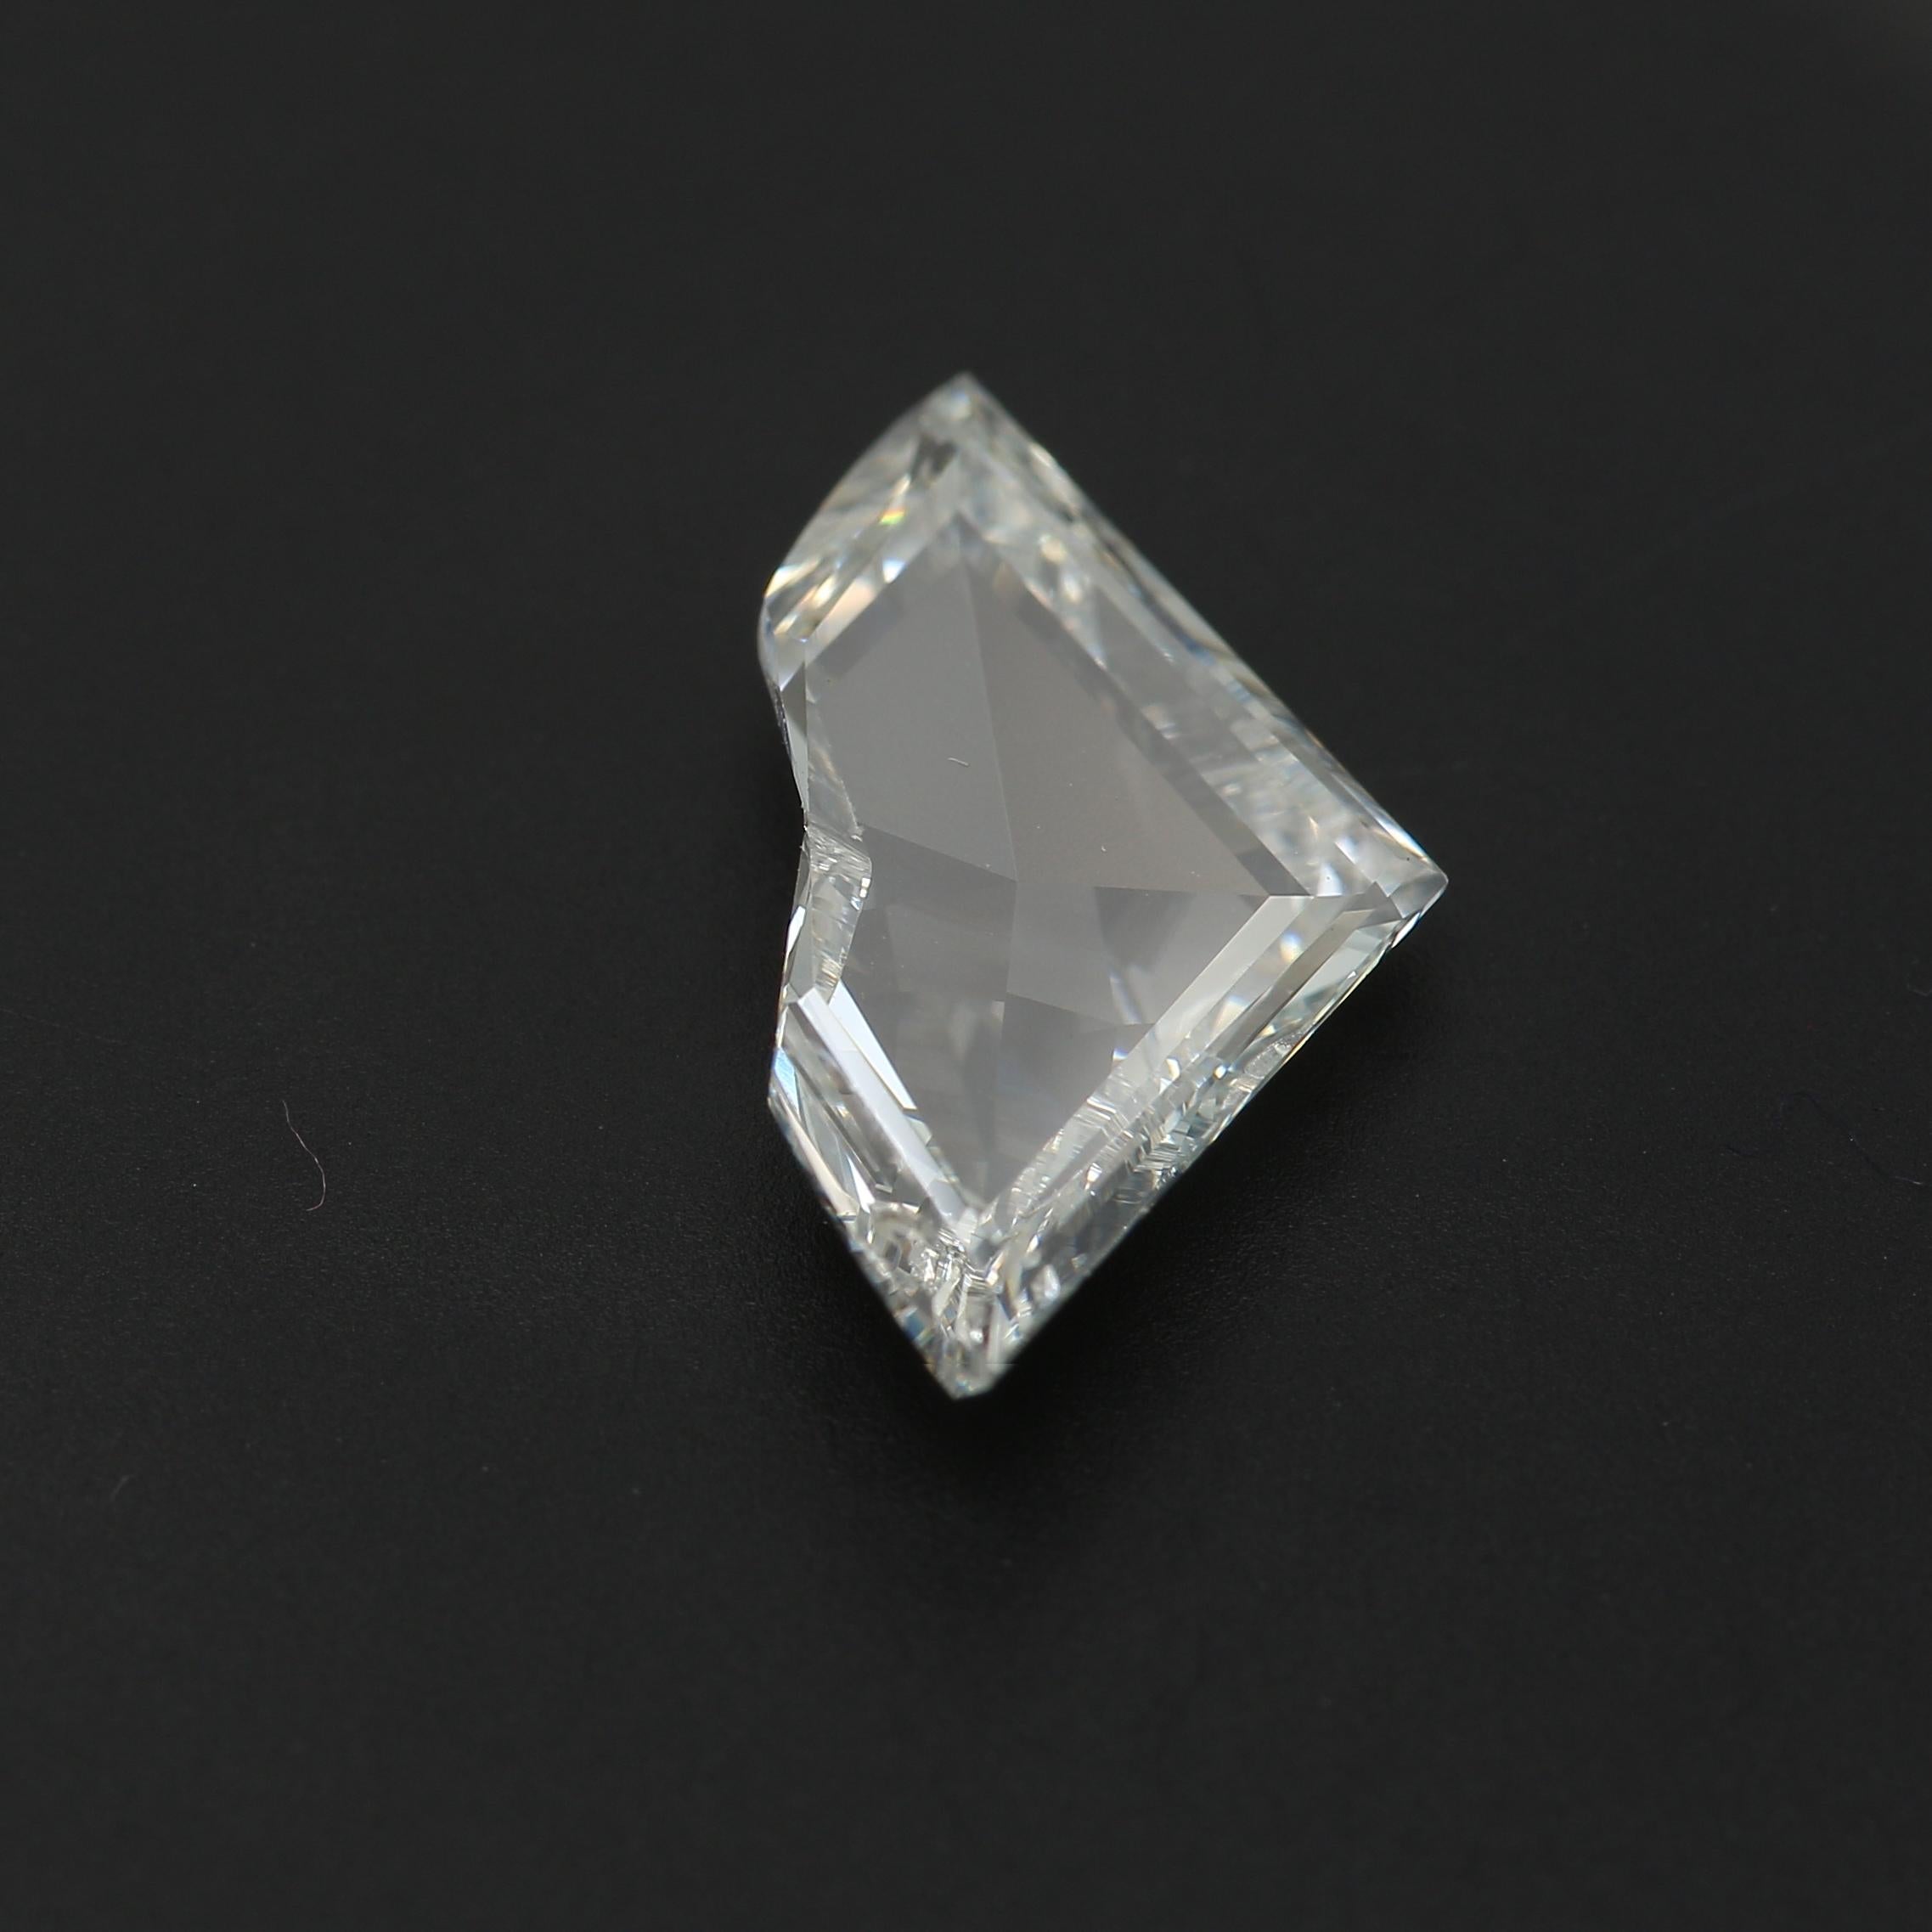 2.24 Carat Shield Cut Diamond I1 Clarity GIA Certified For Sale 1